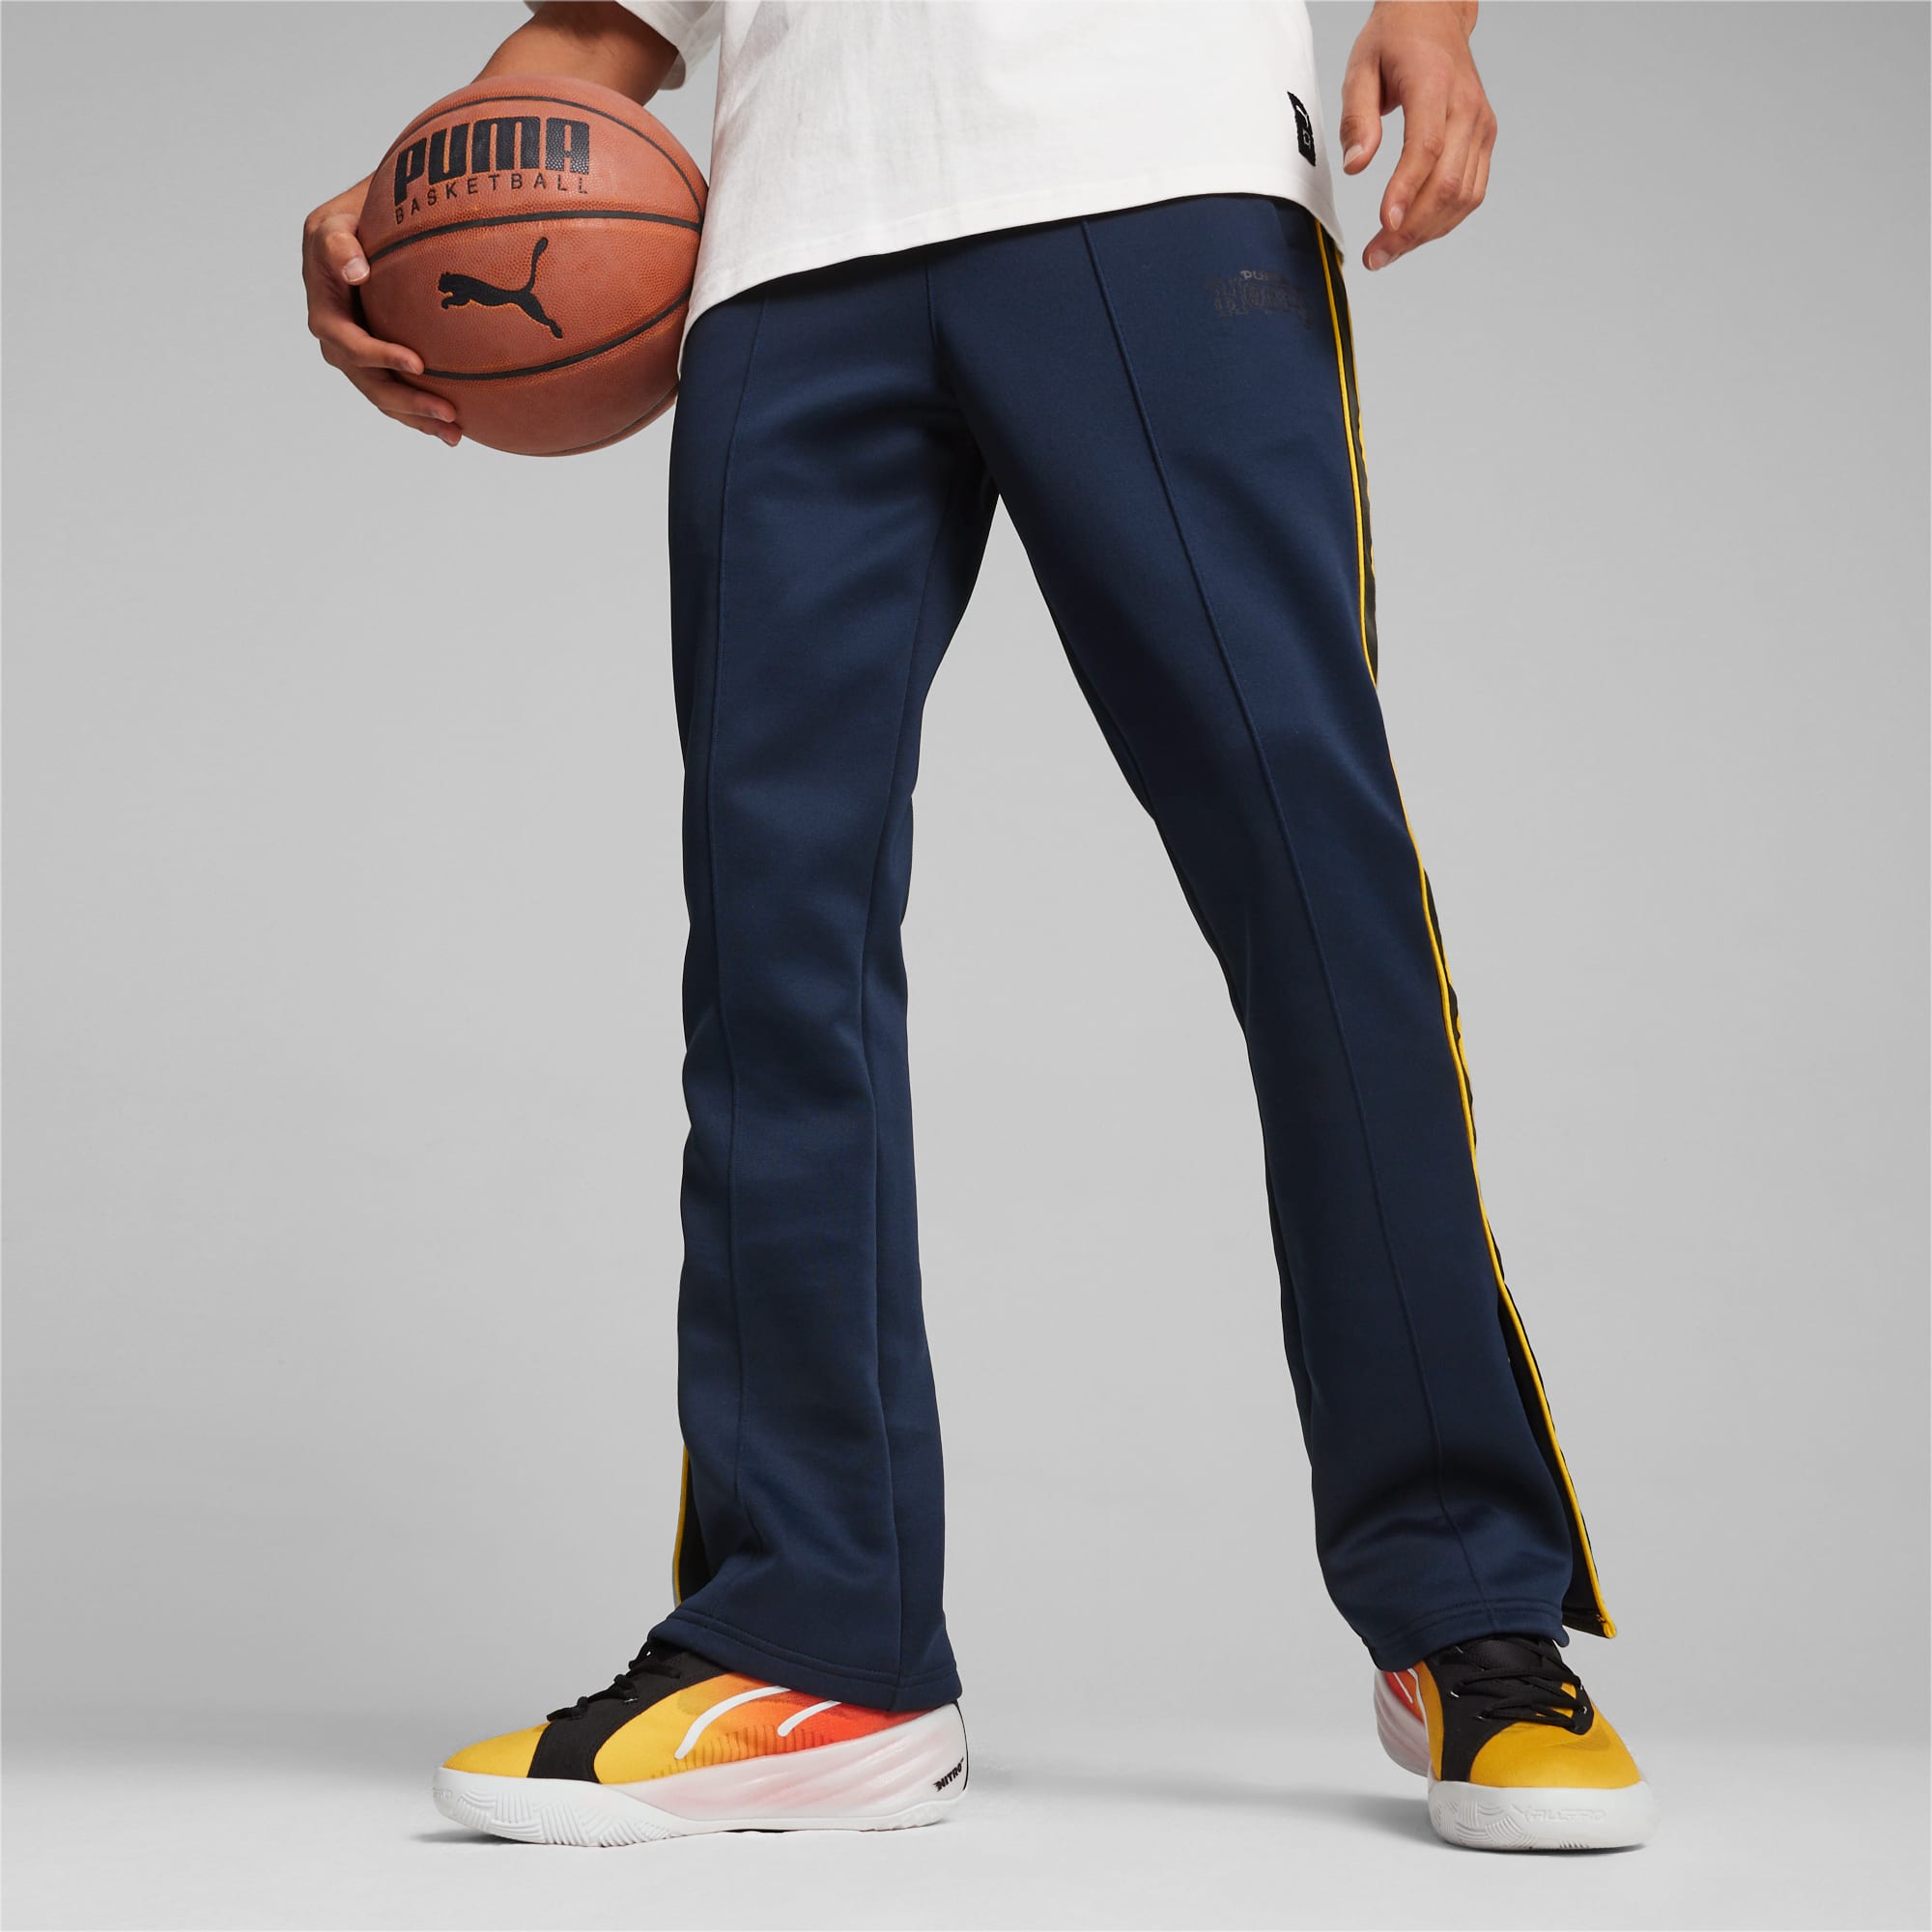 SHOWTIME Men's Basketball Double Knit Pants